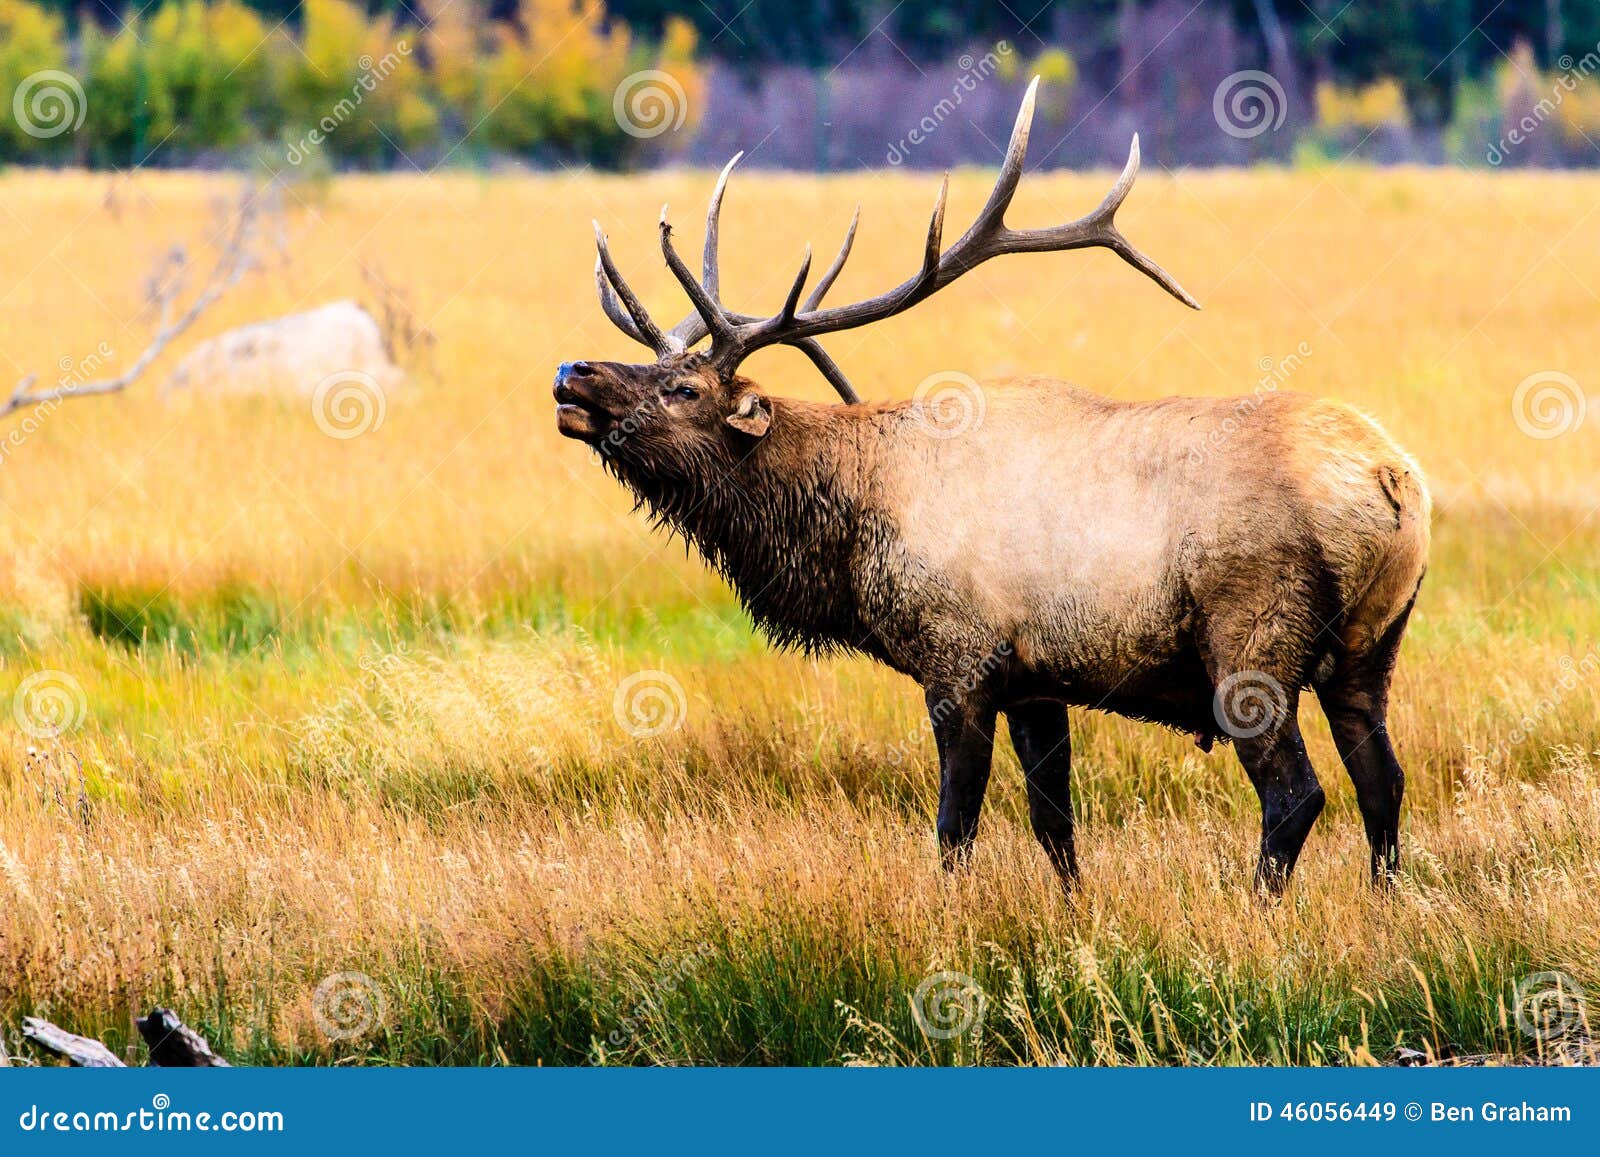 bugling elk